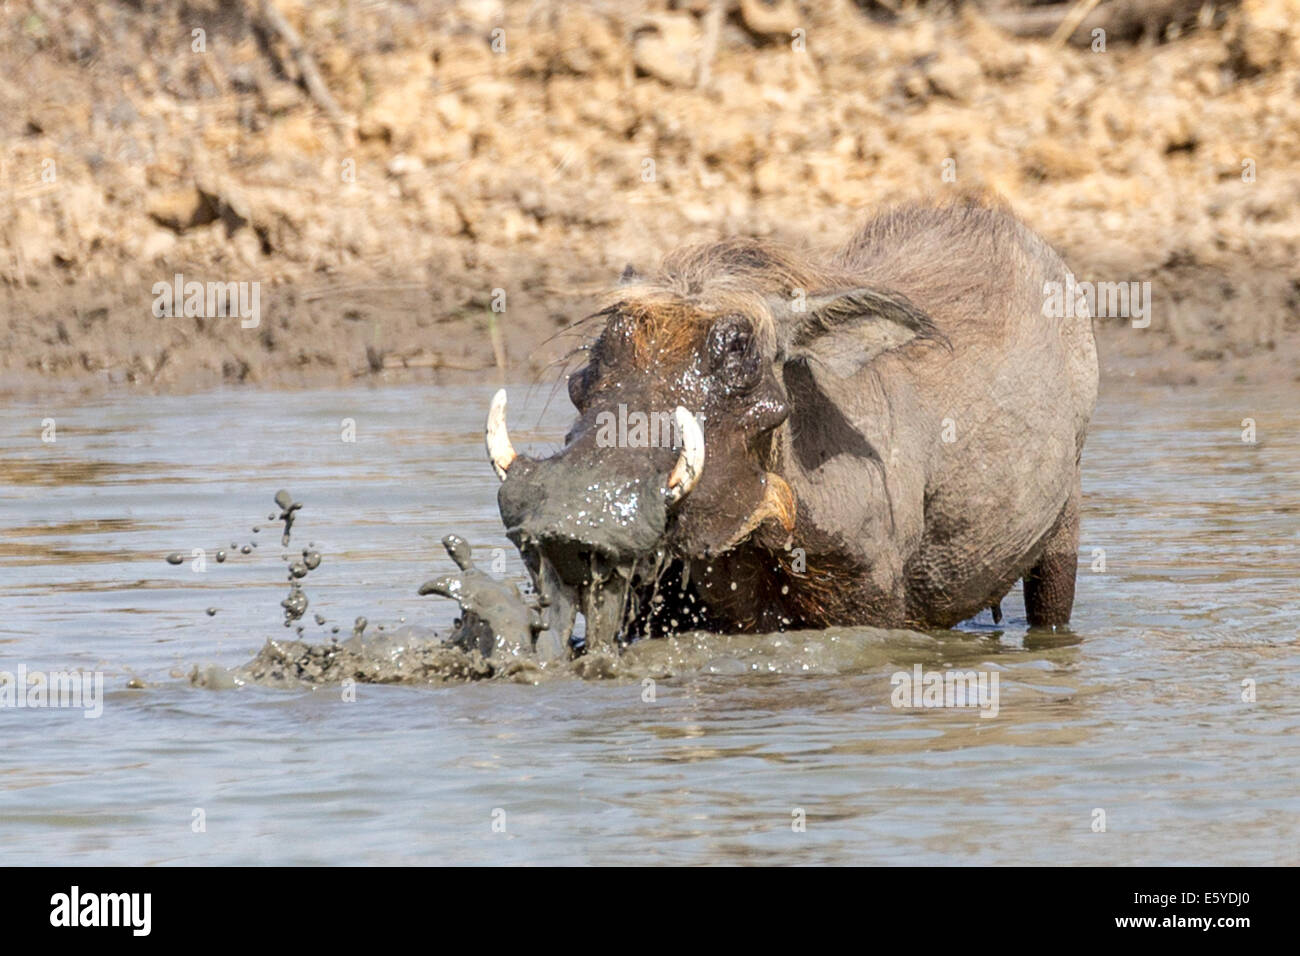 Male Warthog, Djoudj National Bird Sanctuary, Senegal Stock Photo